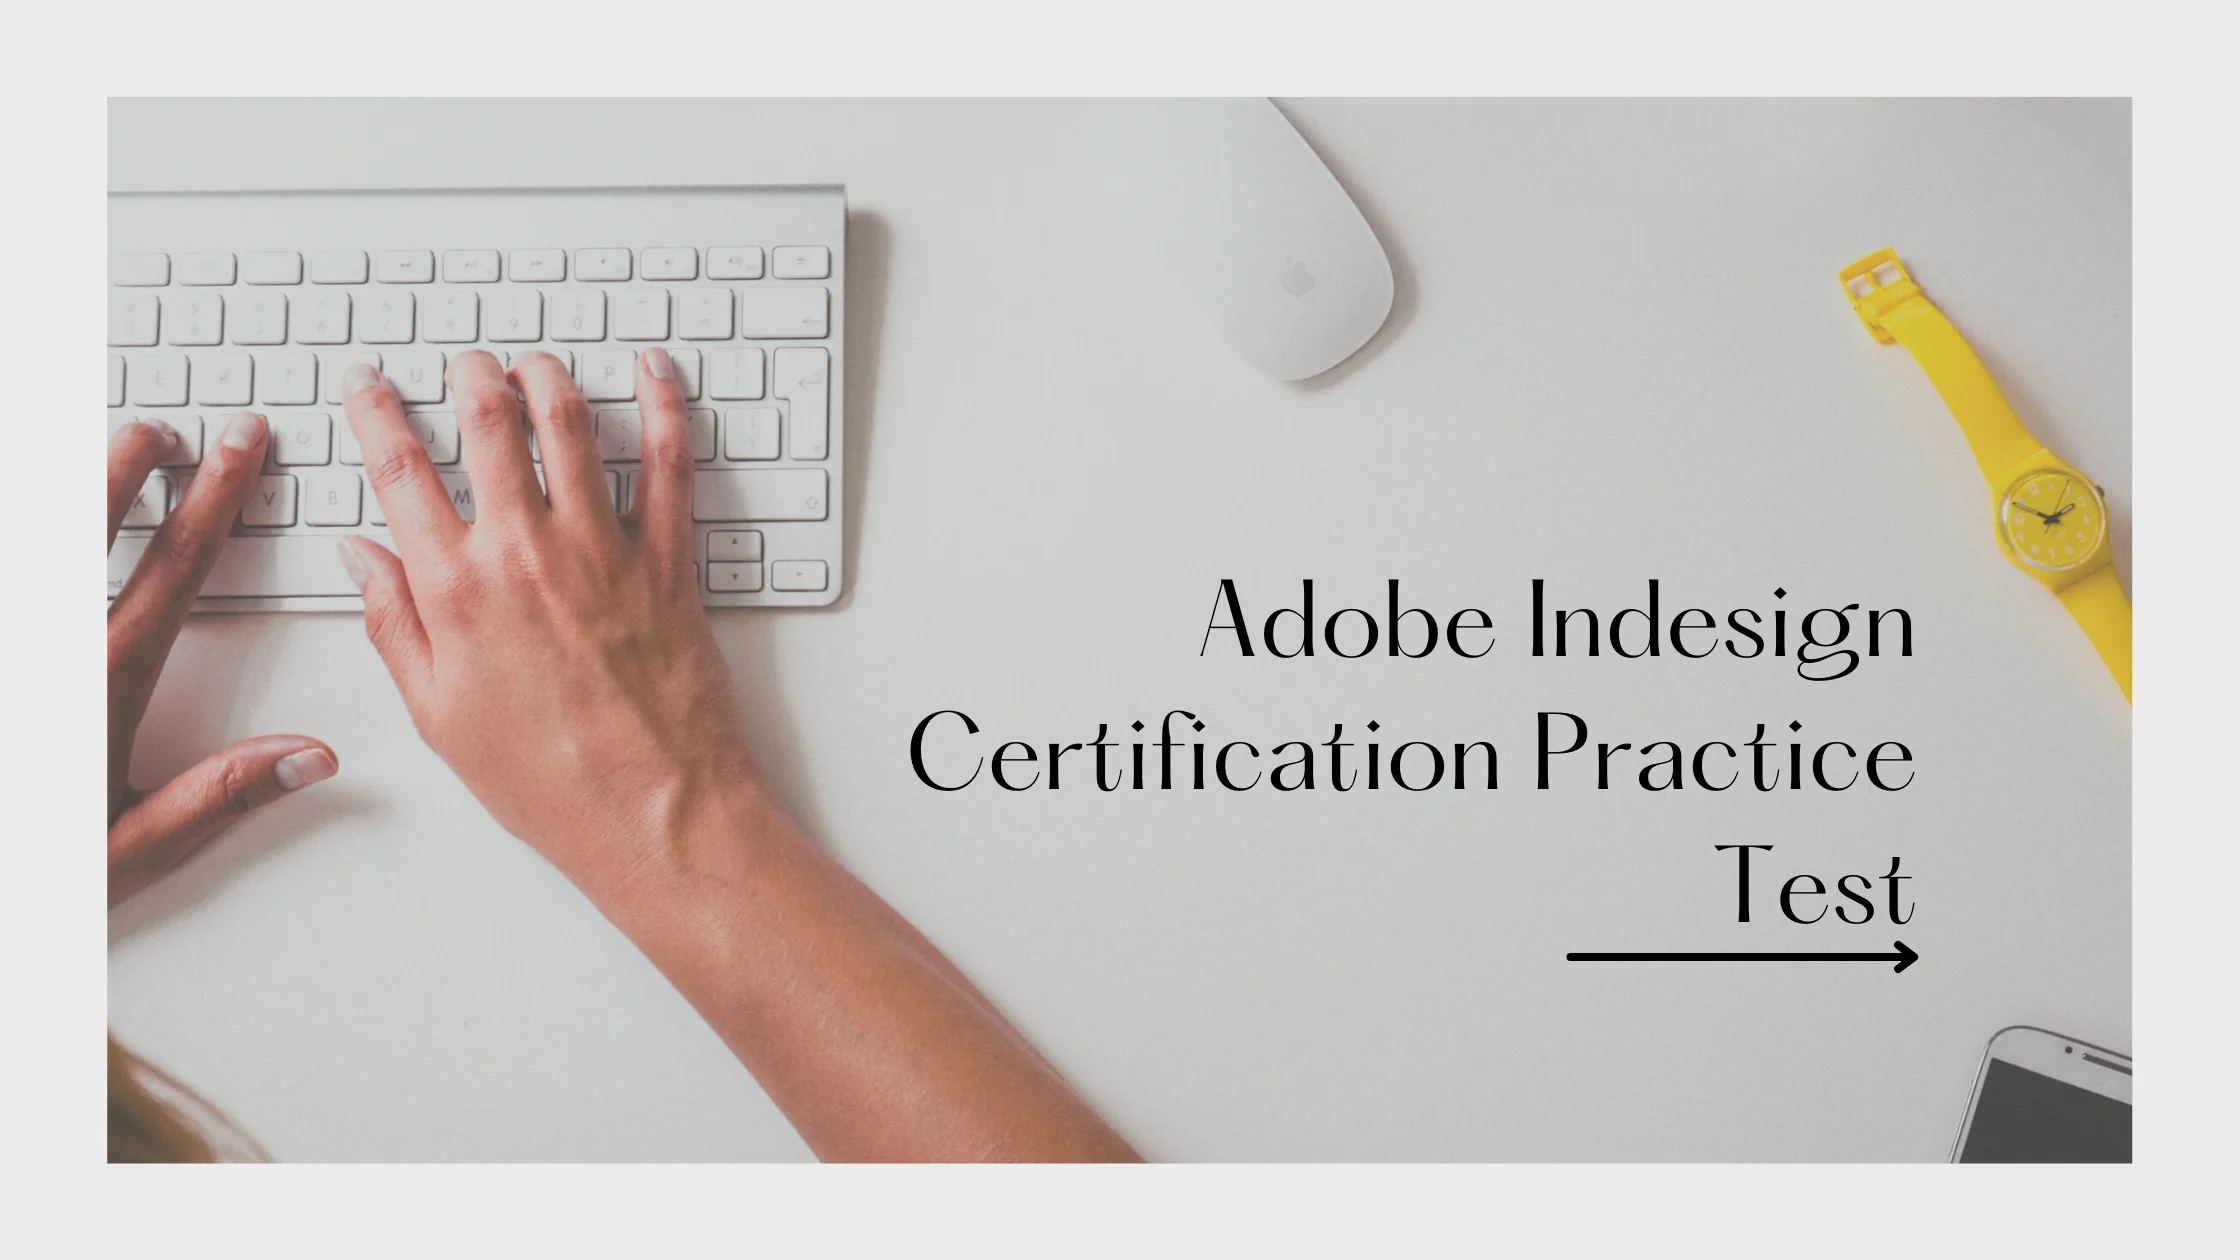 Adobe Indesign Certification Practice Test